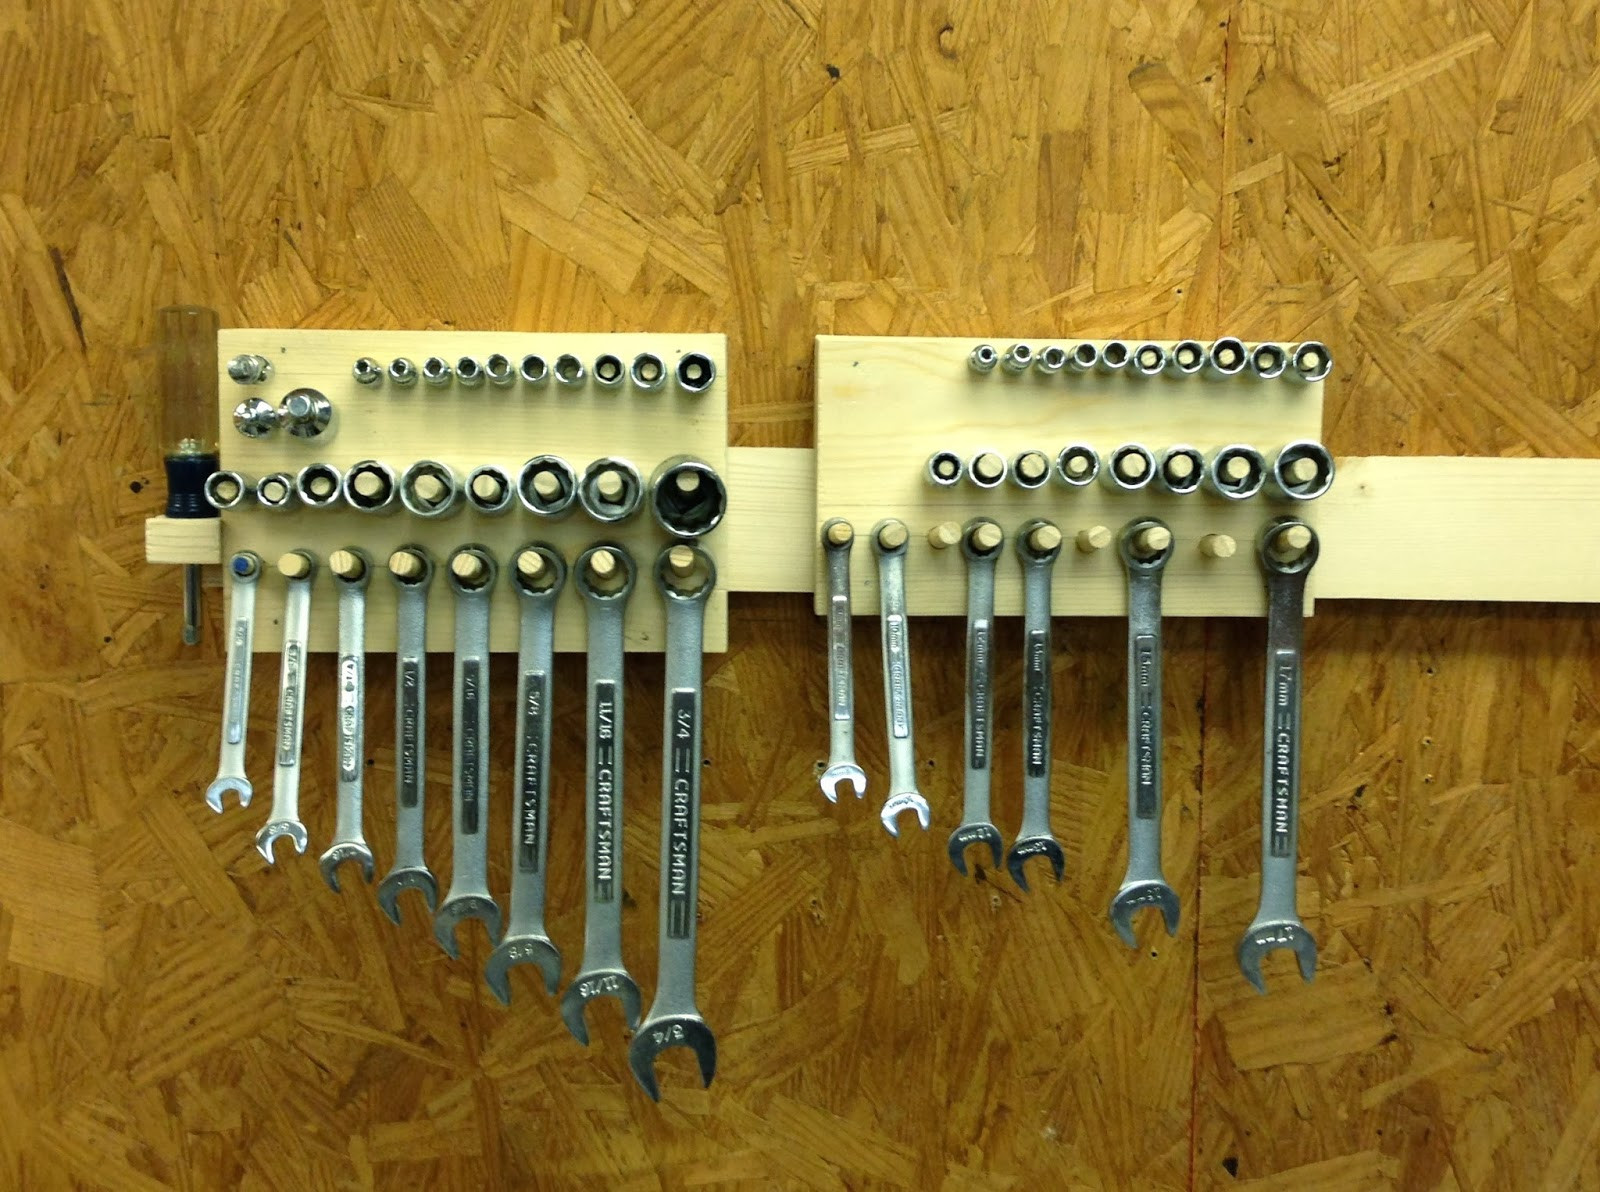 DIY Tool Organizer
 Wilker Do s DIY Storage for Hand Tools